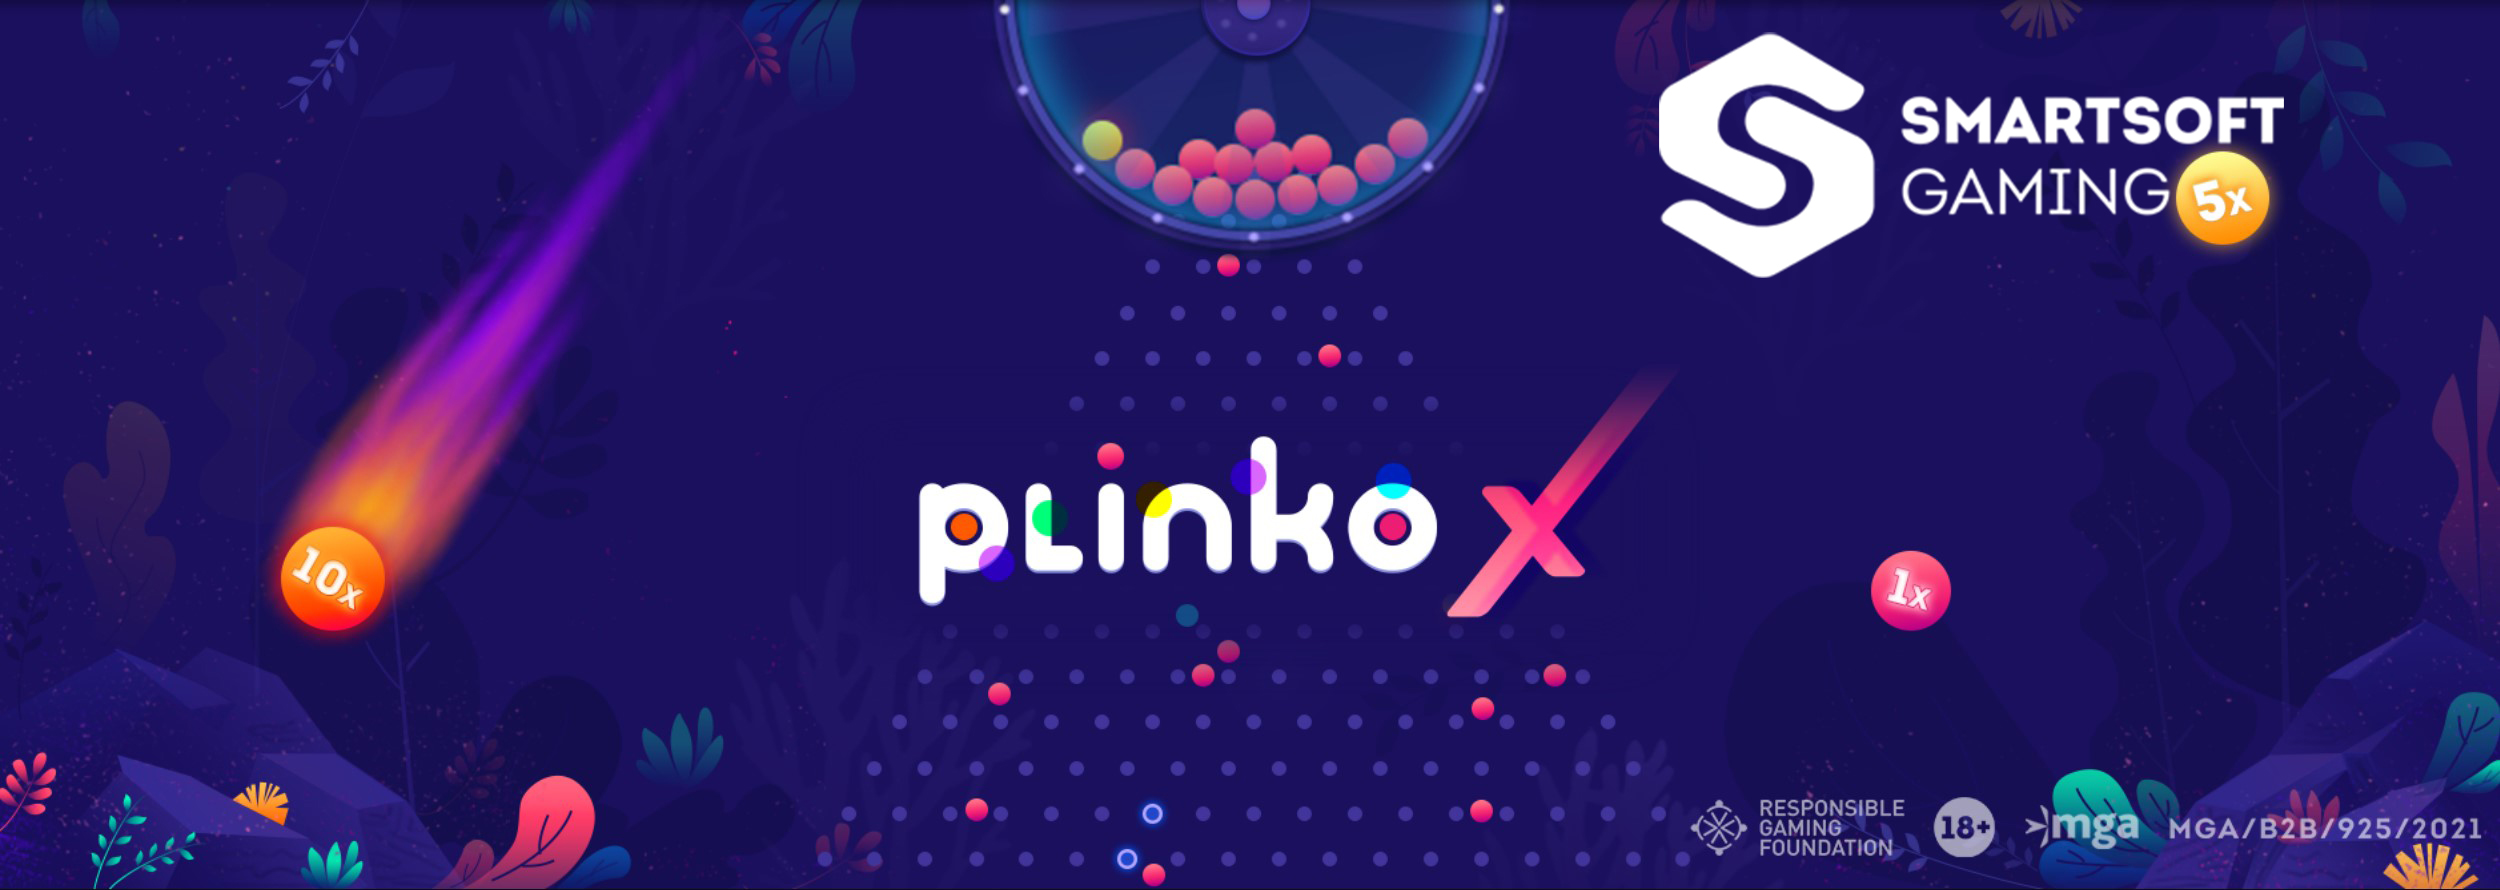 Plinko X By Smartsoft Gaming